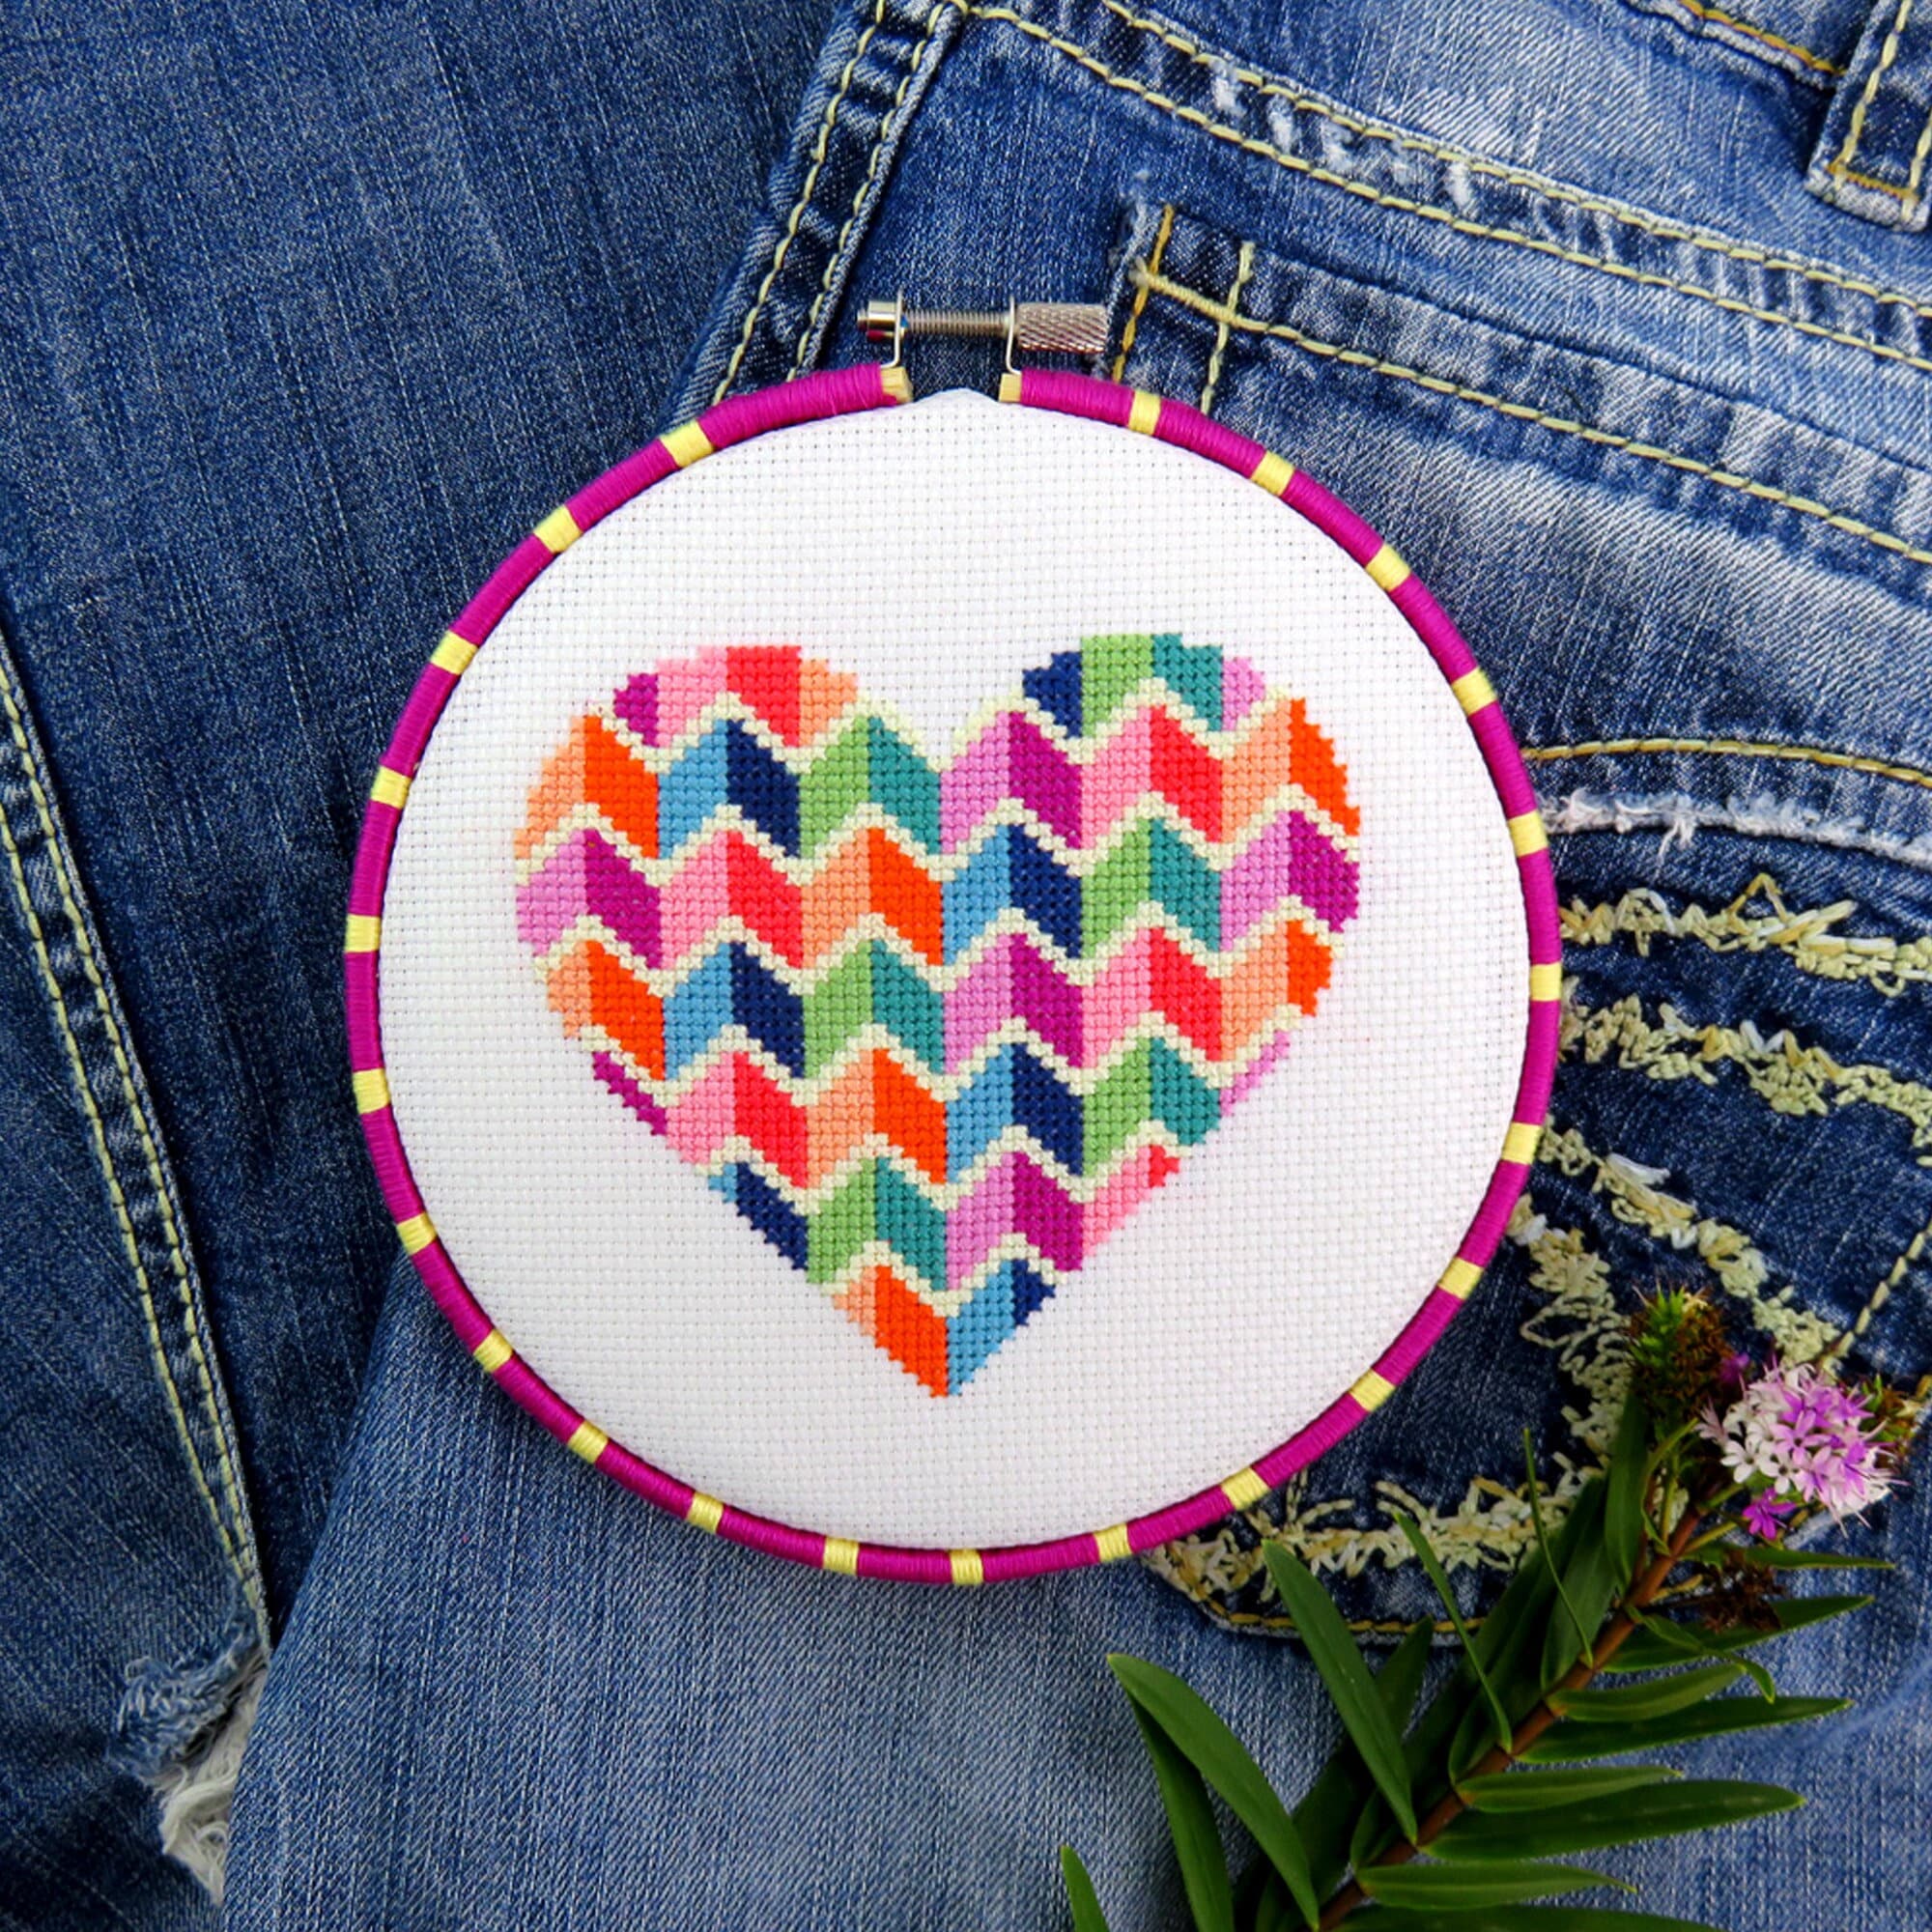 Heart Embroidery Scissors, Small Heart Scissors, Cross Stitch